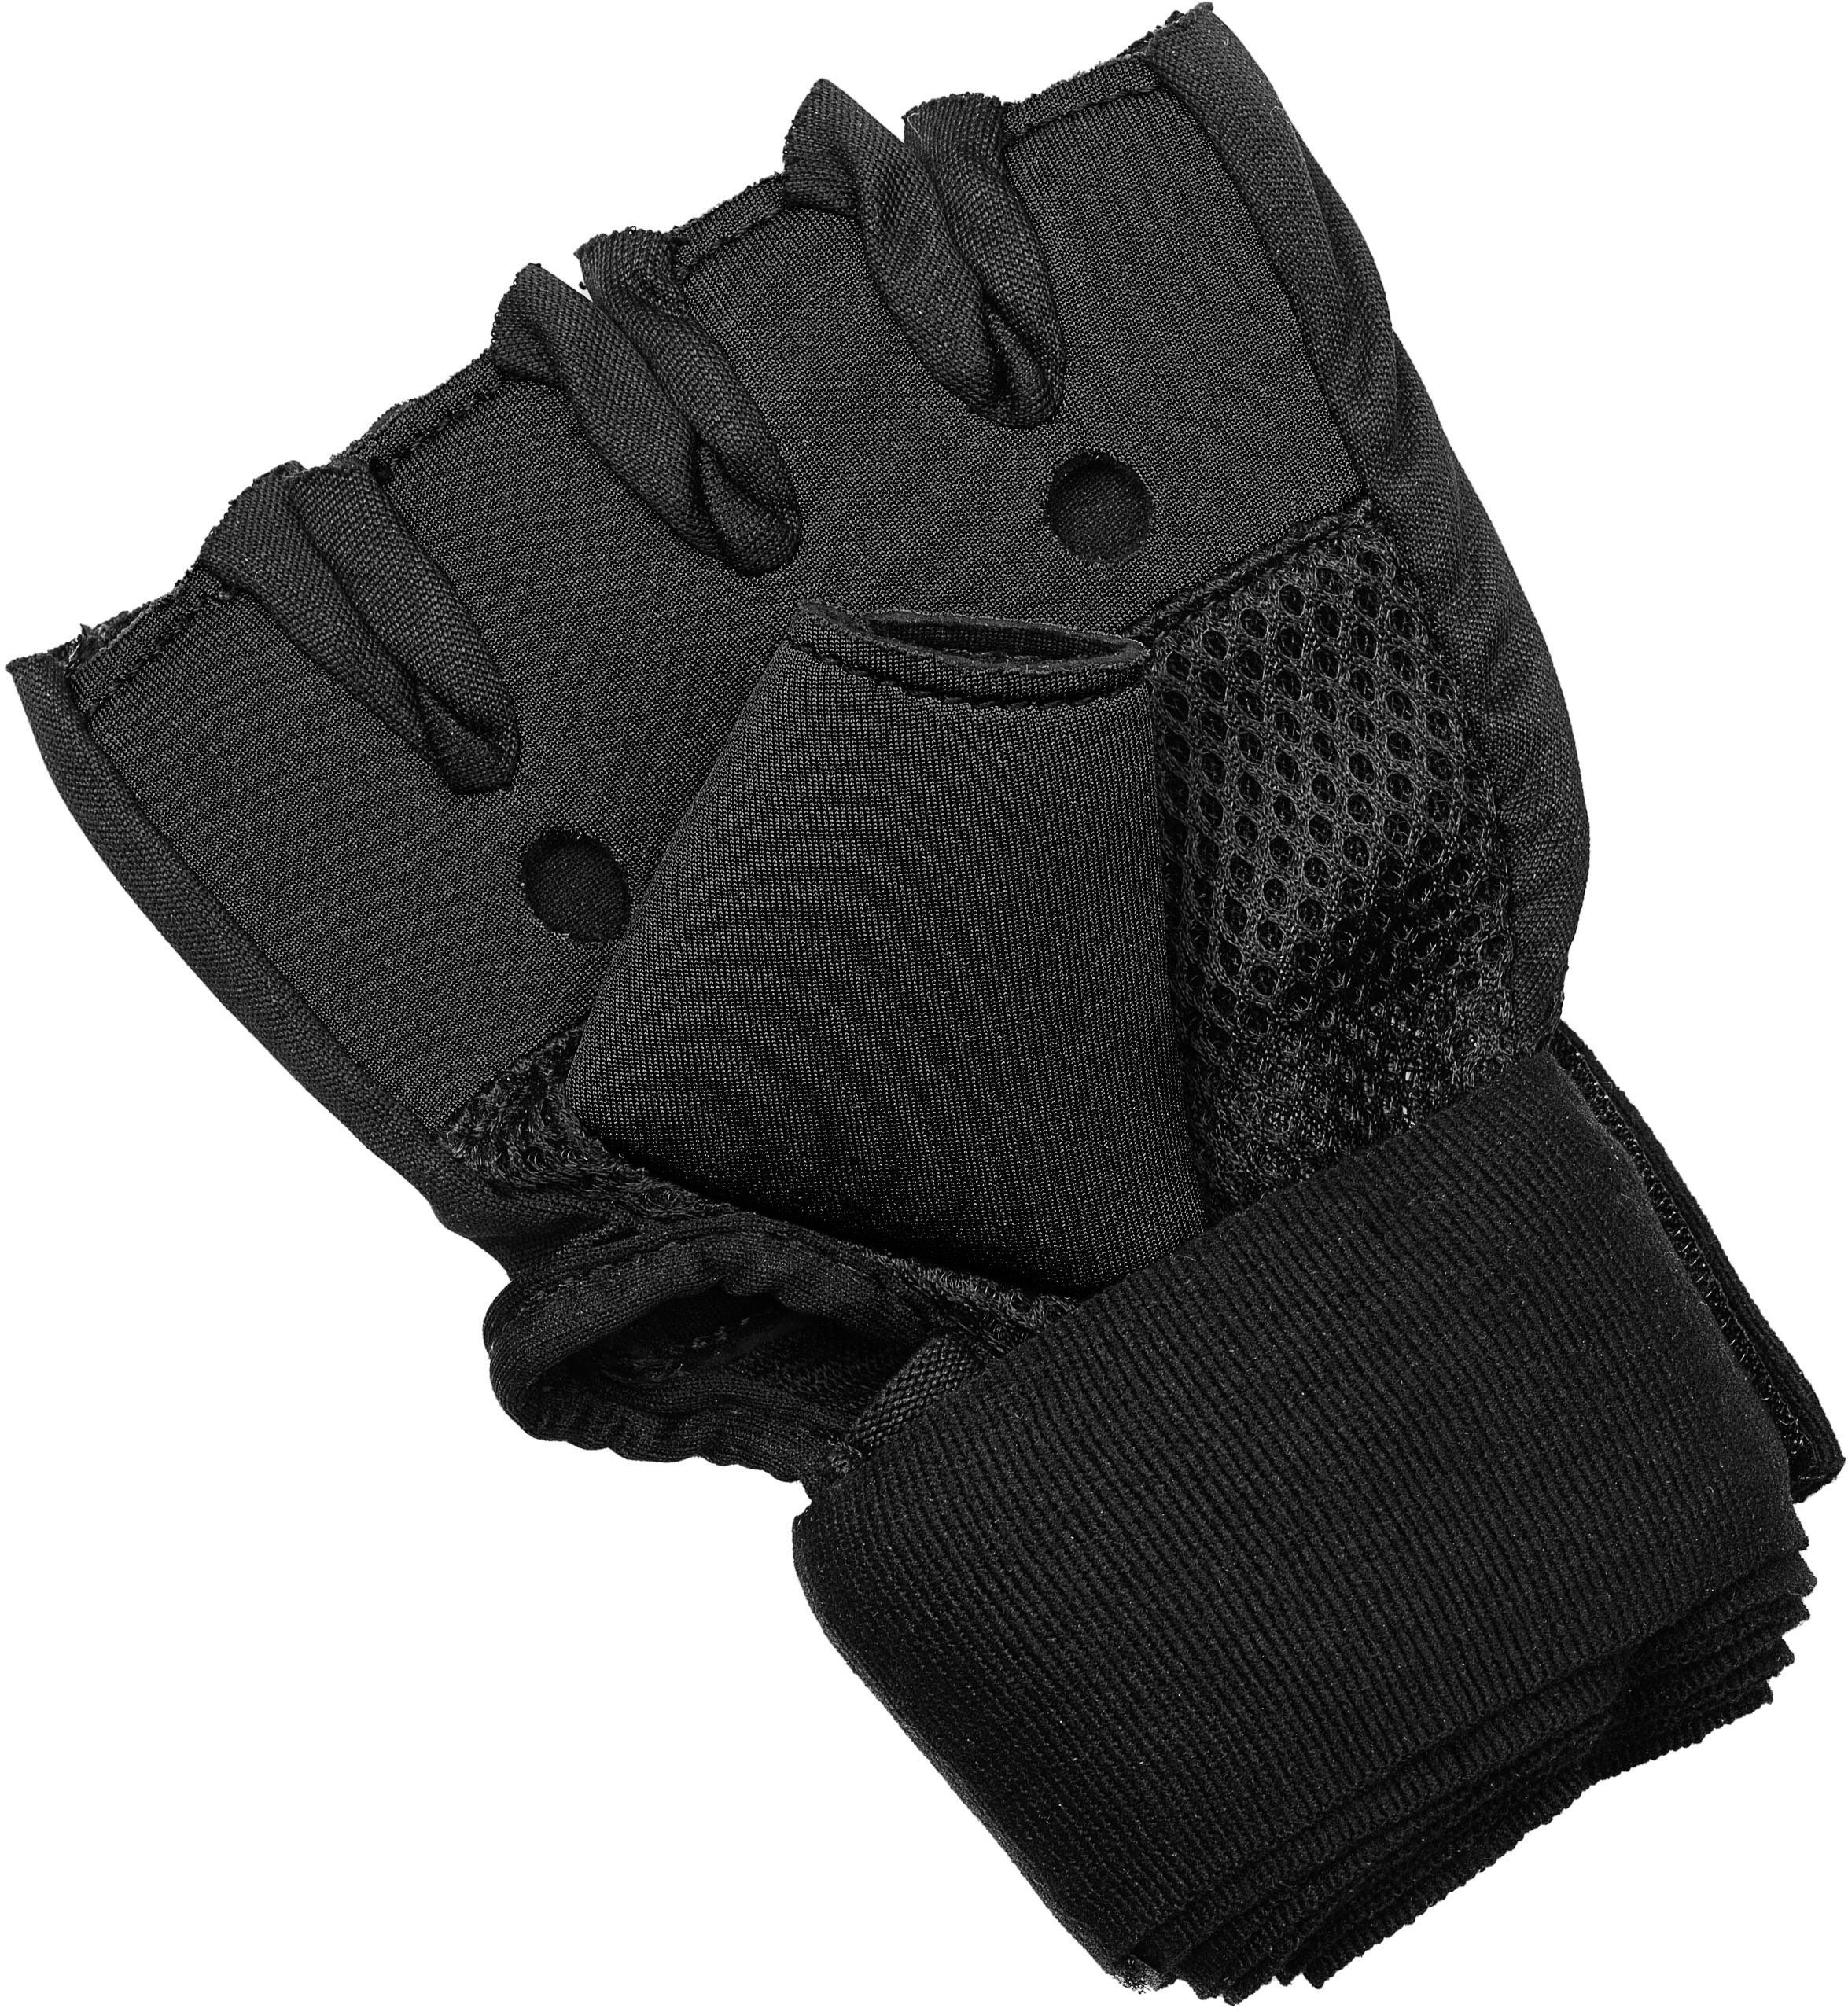 Glove Performance Punch-Handschuhe Speed Wrap Gel adidas